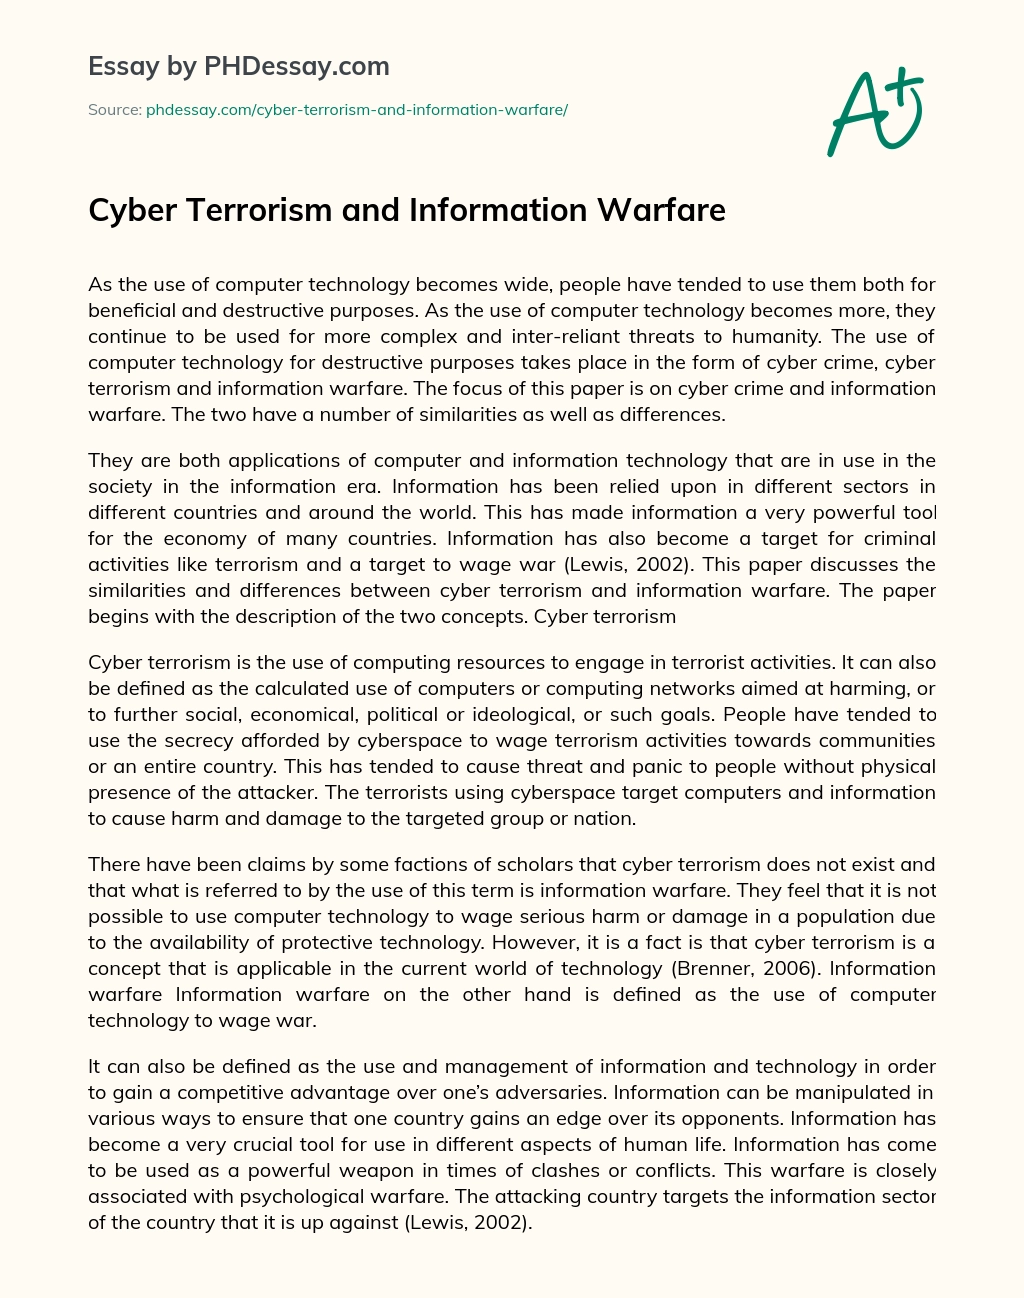 Cyber Terrorism and Information Warfare essay